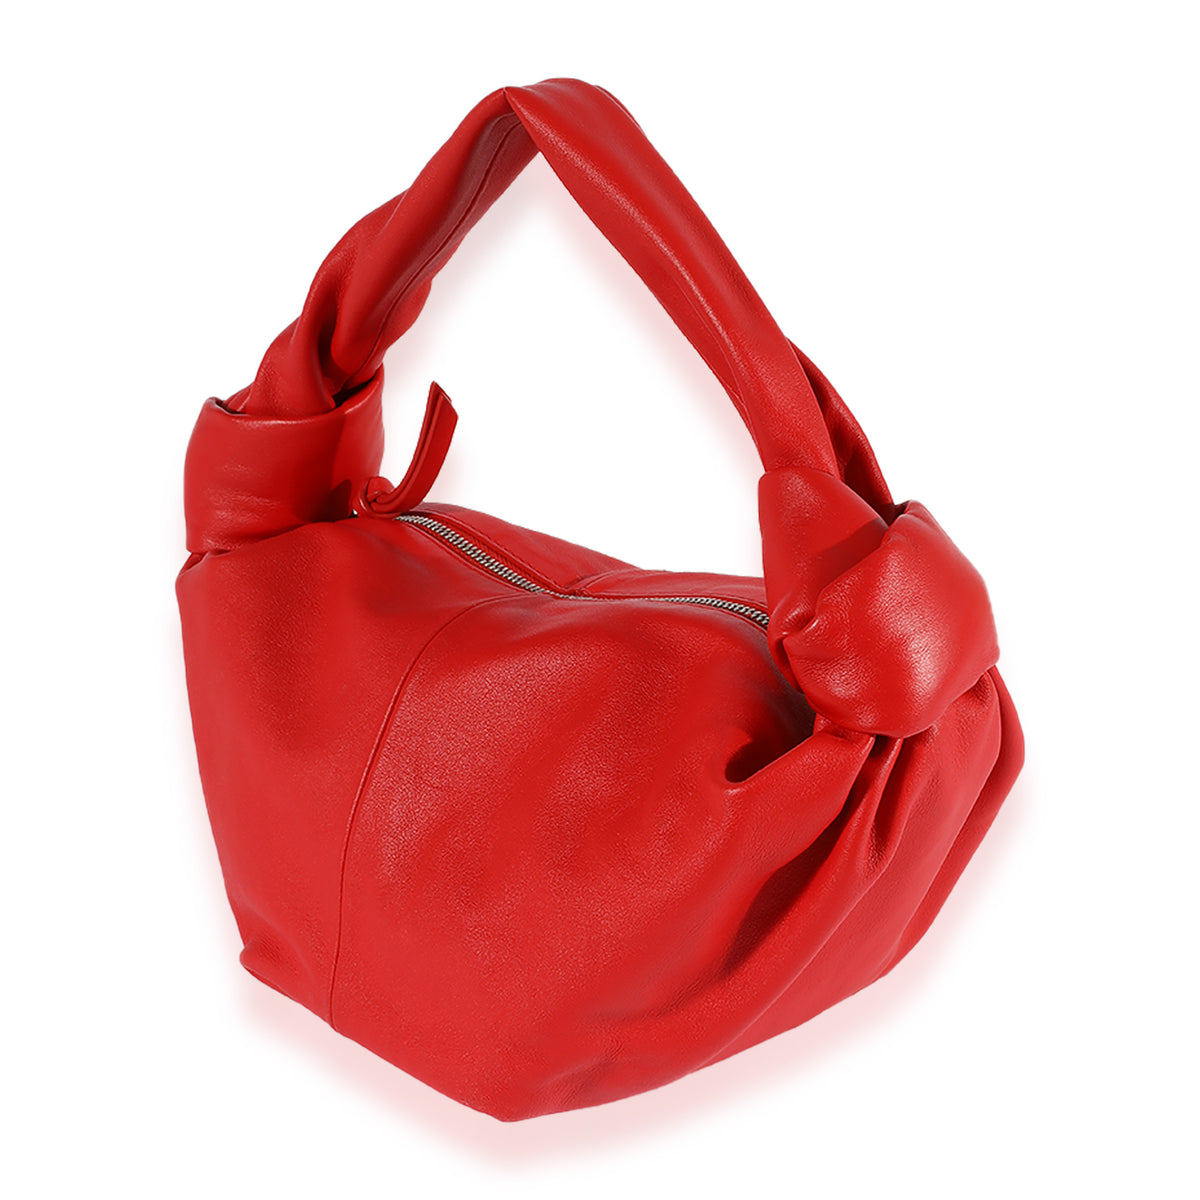 Bottega Veneta Double Knot Bag Review